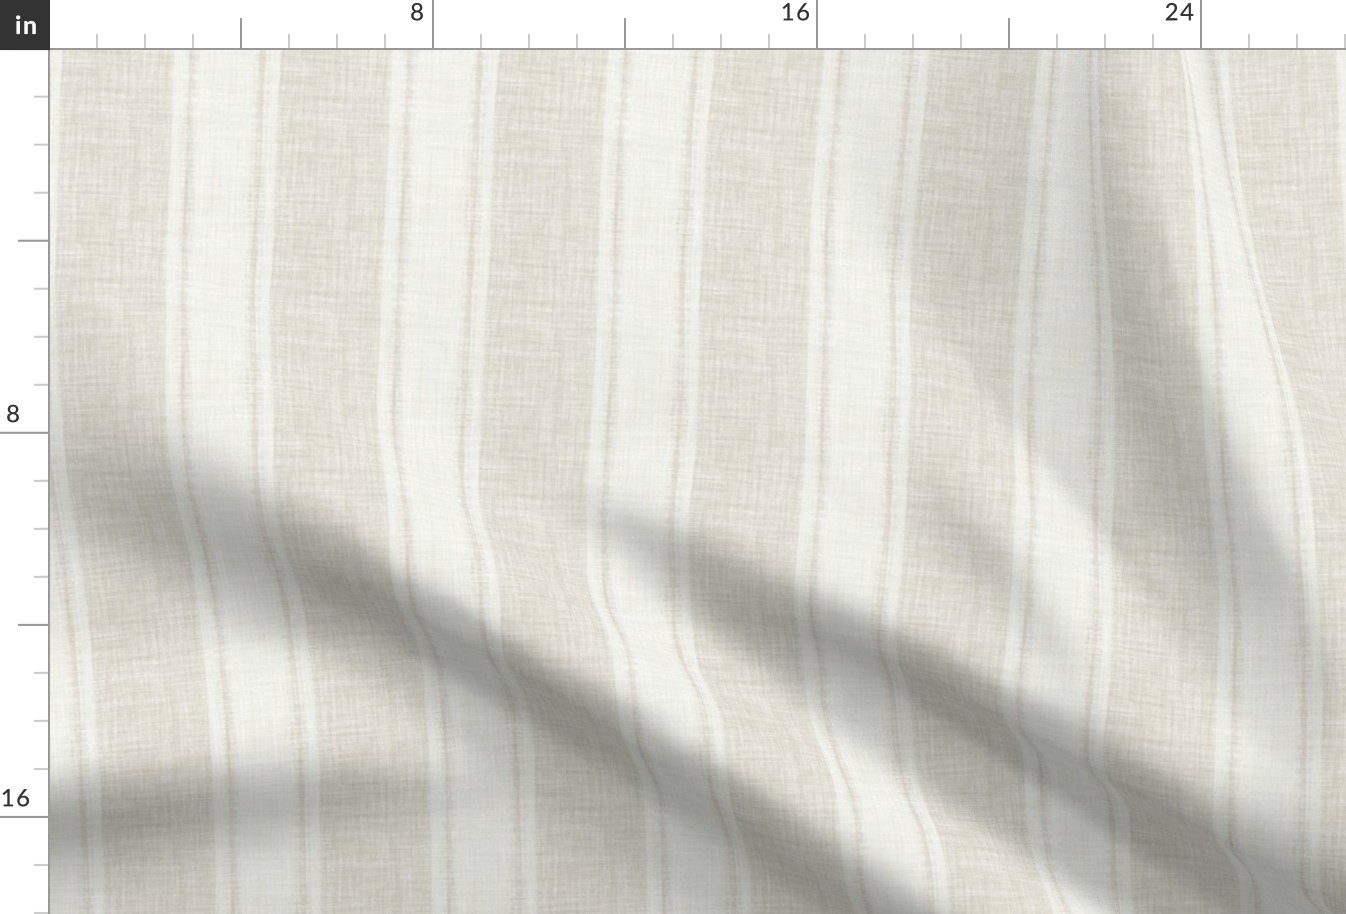 thin-thick woven stripe // pale oak beige